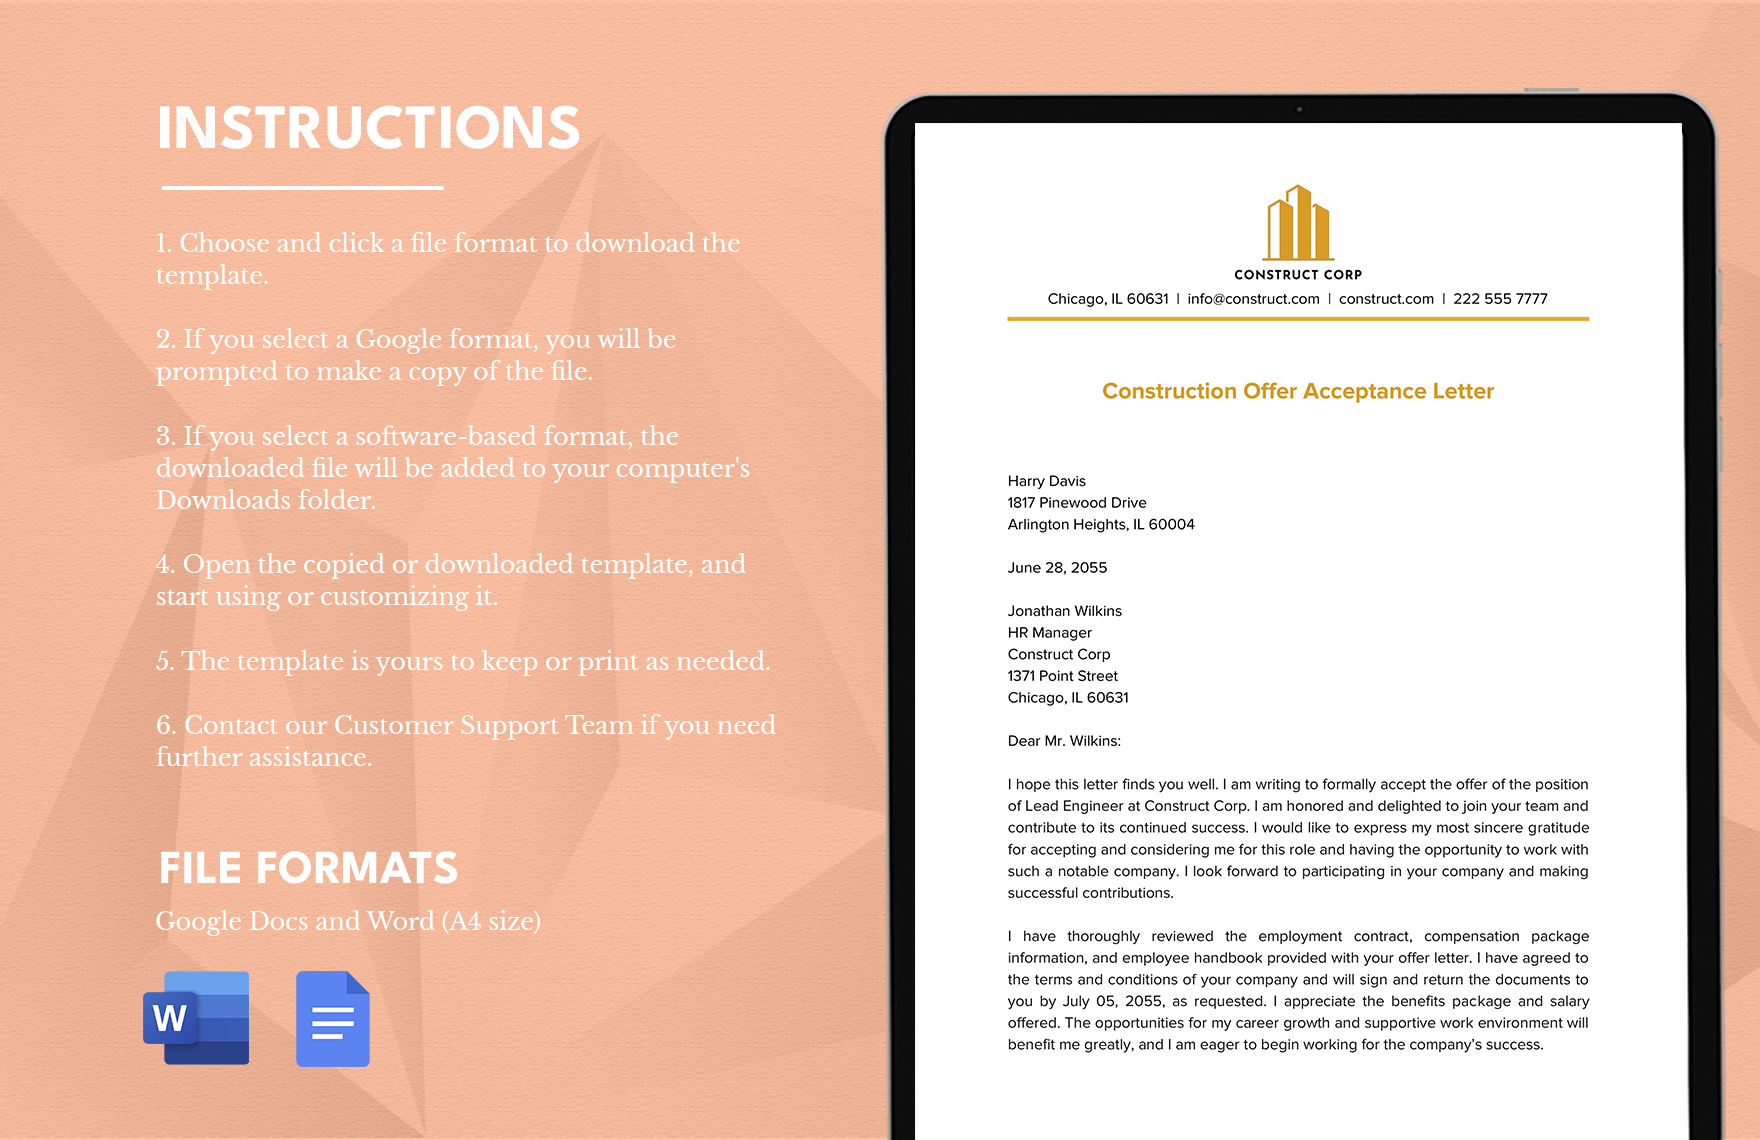 Construction Offer Acceptance Letter